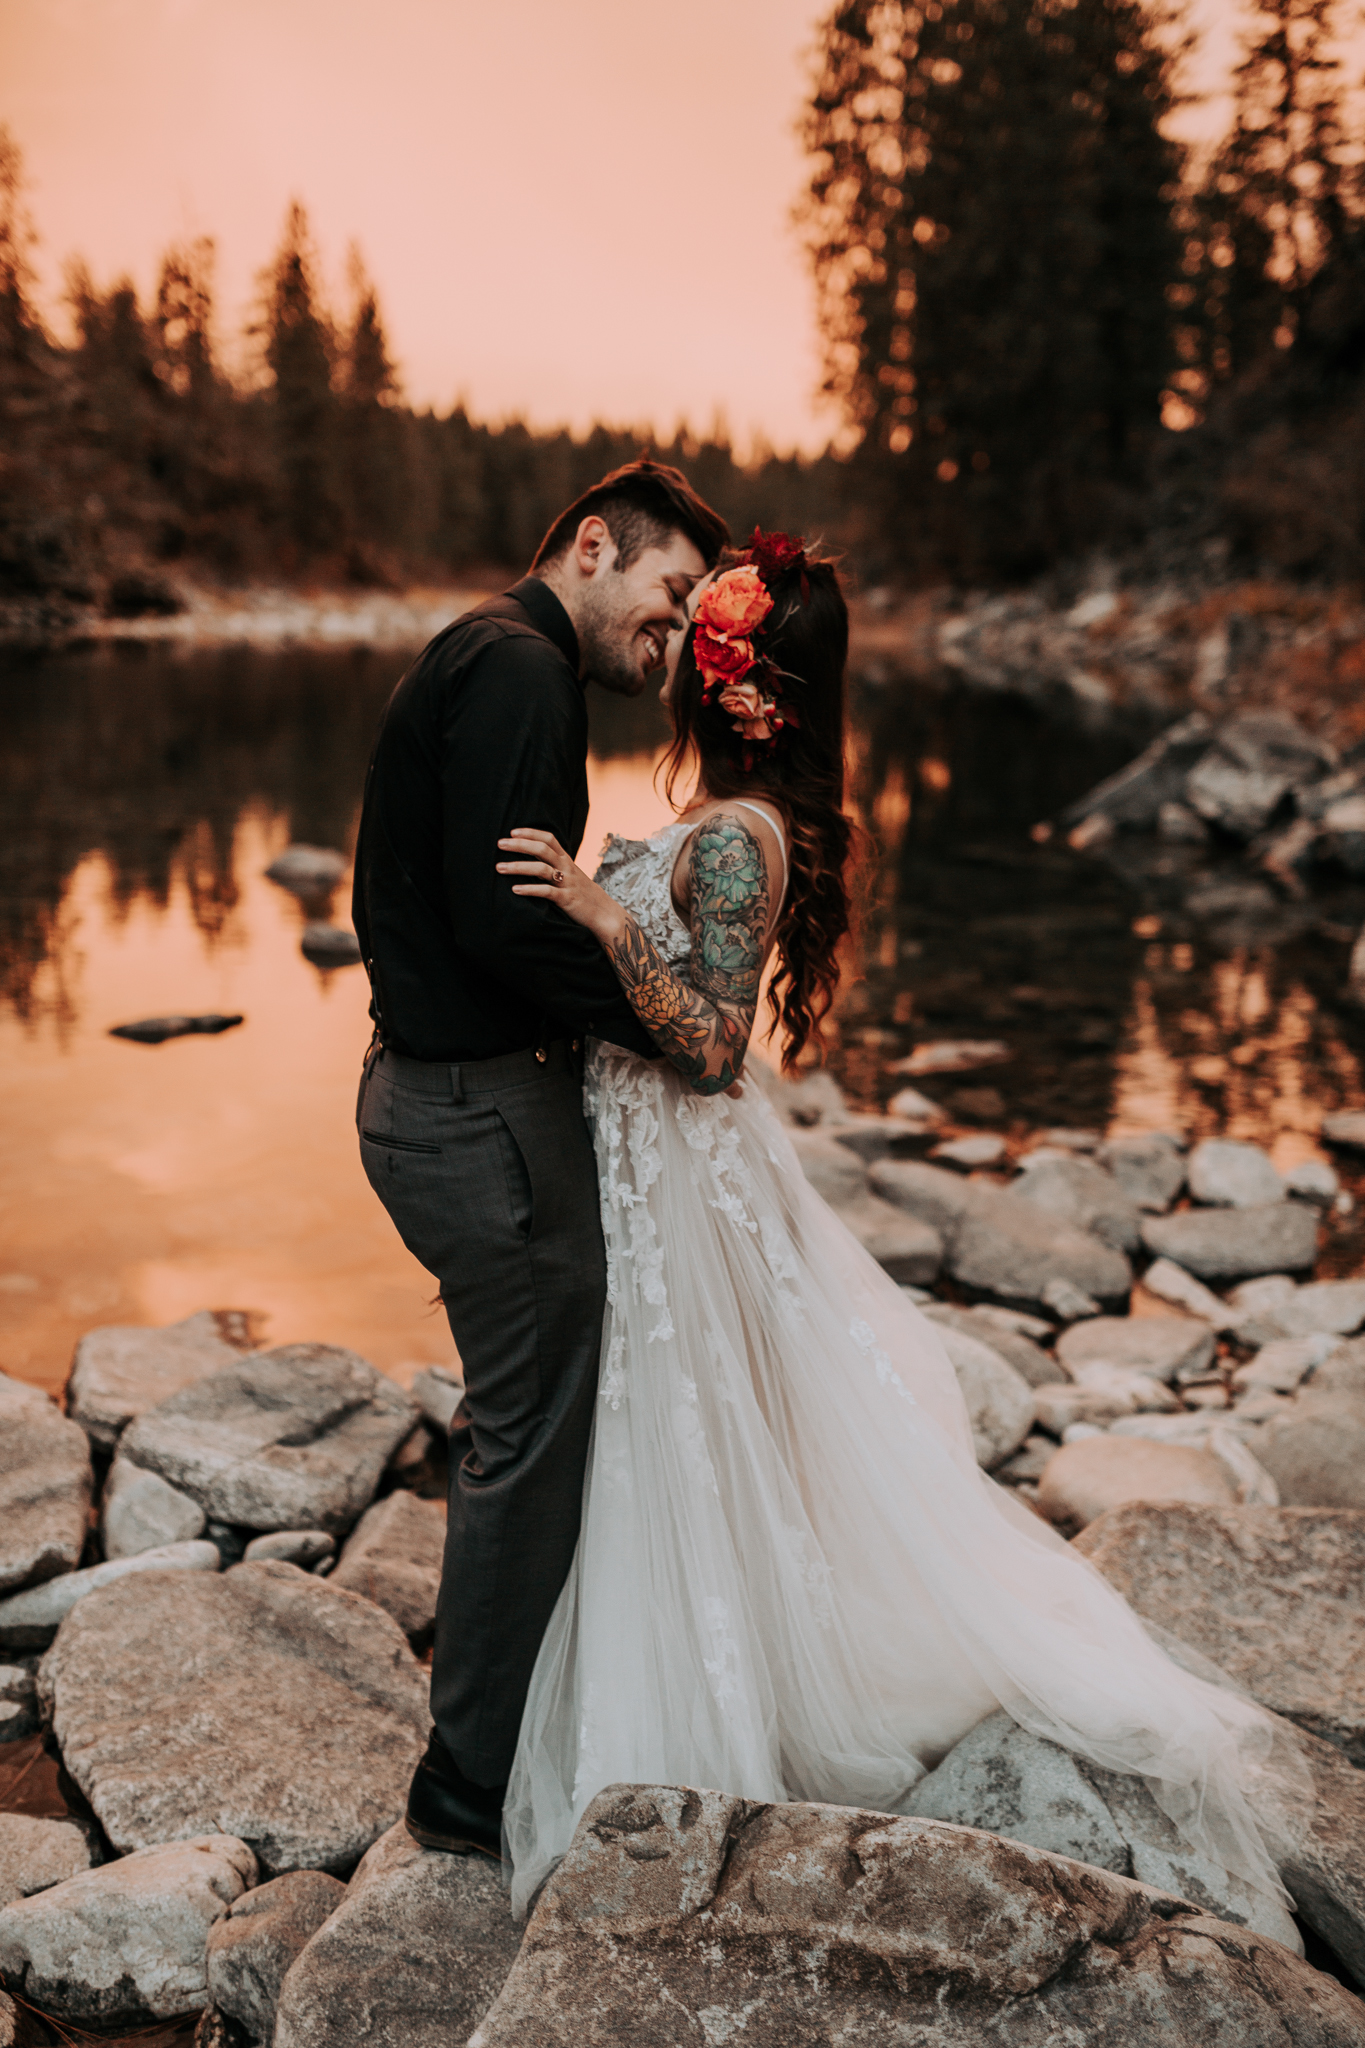 Smile kiss sunset bridal wedding photo shoot spokane